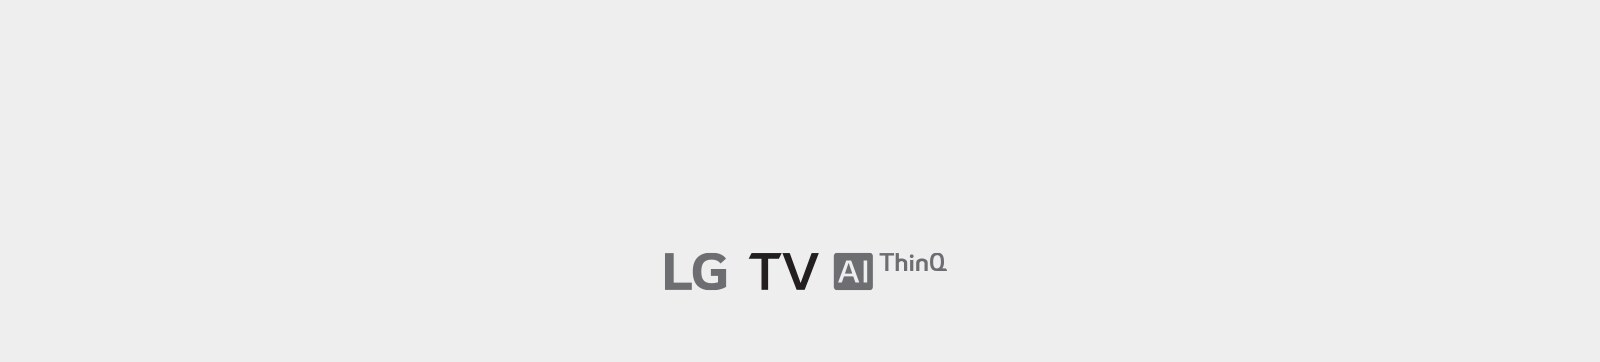 TV-AI(ThinQ)-05-Desktop-new